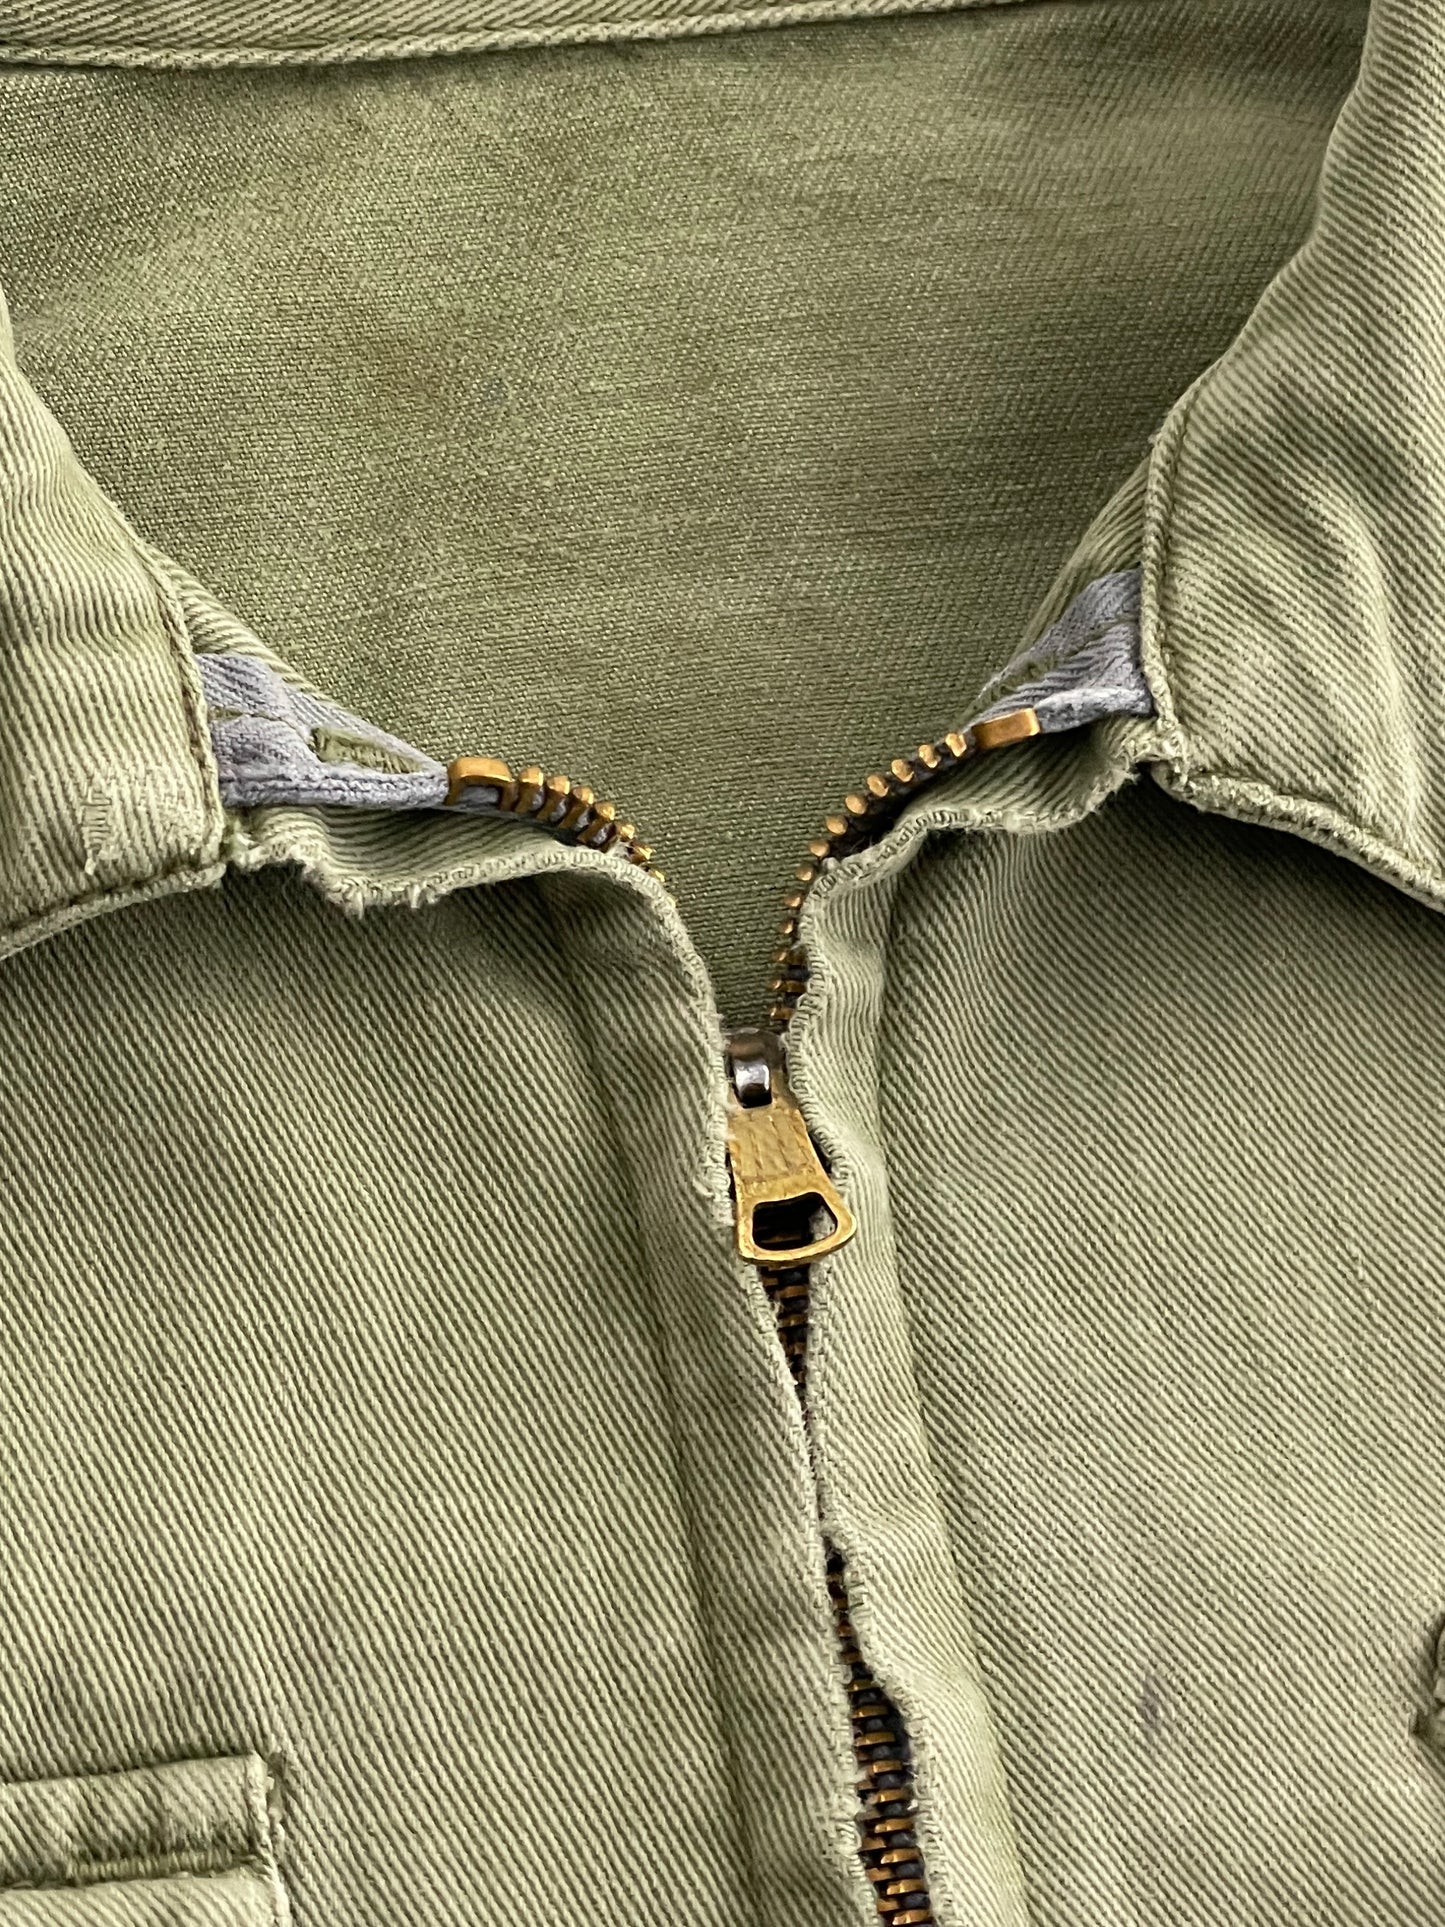 Aus Military Zip Jacket [XS/S]